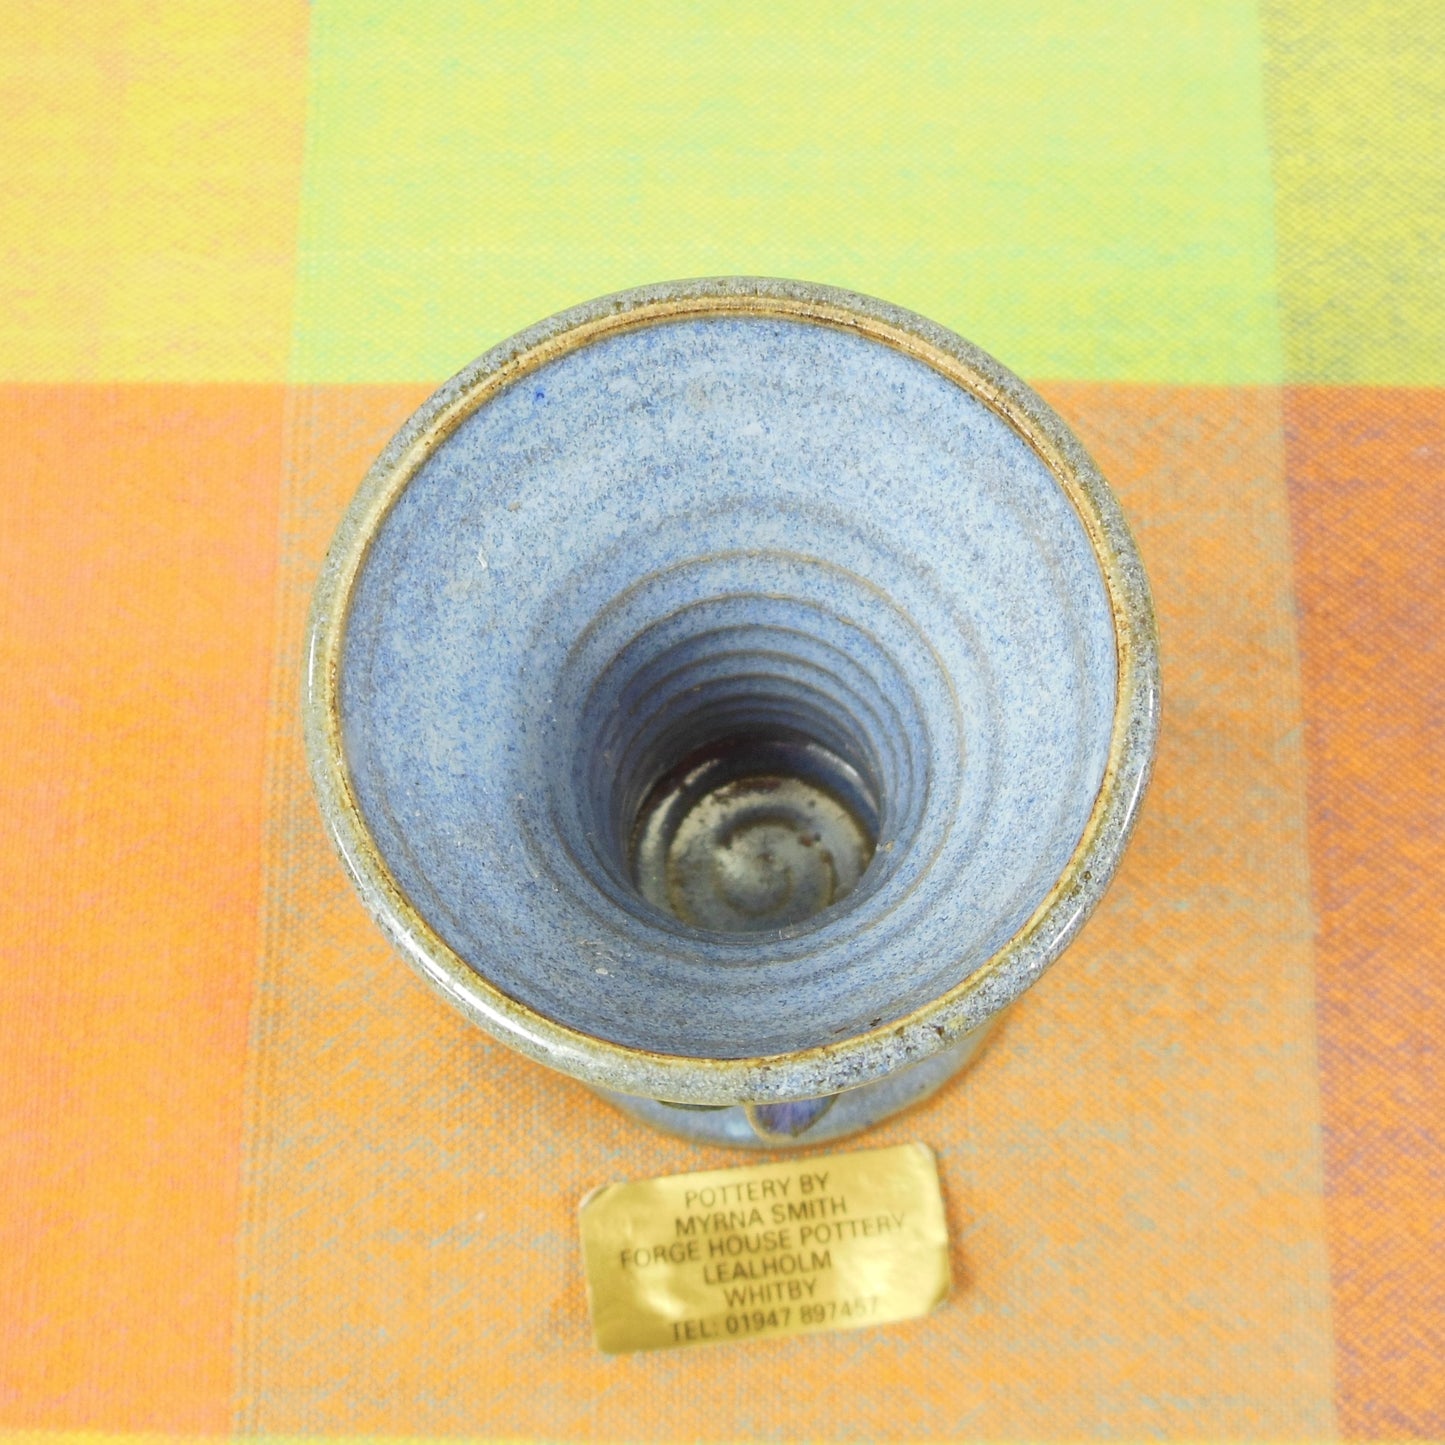 Myrna Smith Forge House Pottery England Small Blue Violet Vase Label